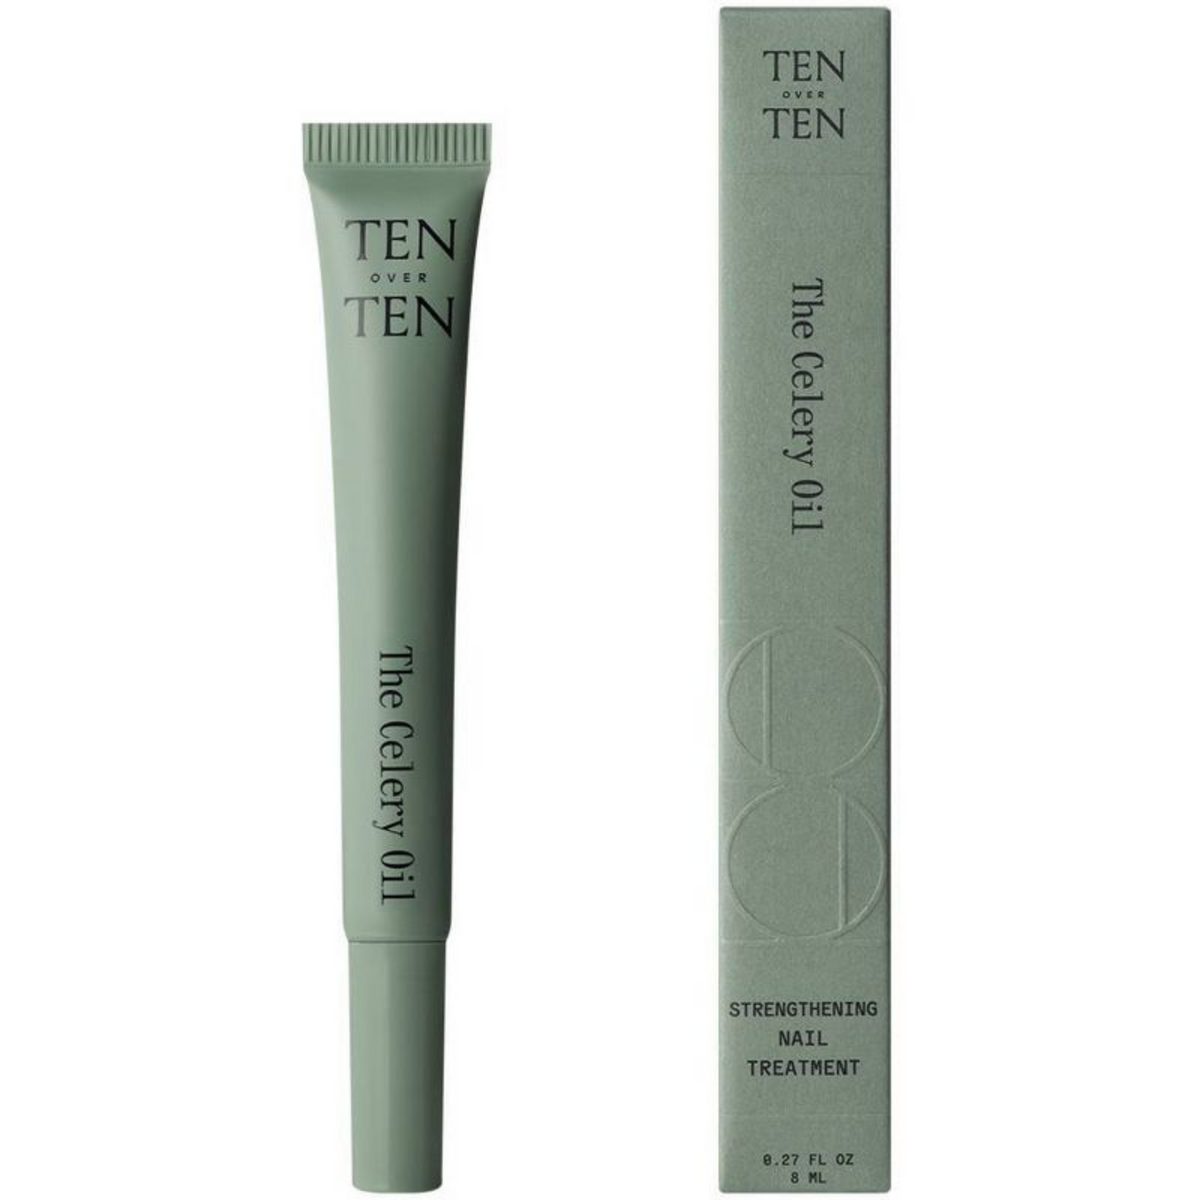 Primary Image of tenoverten The Celery Oil Nail Treatment (0.27 fl oz)